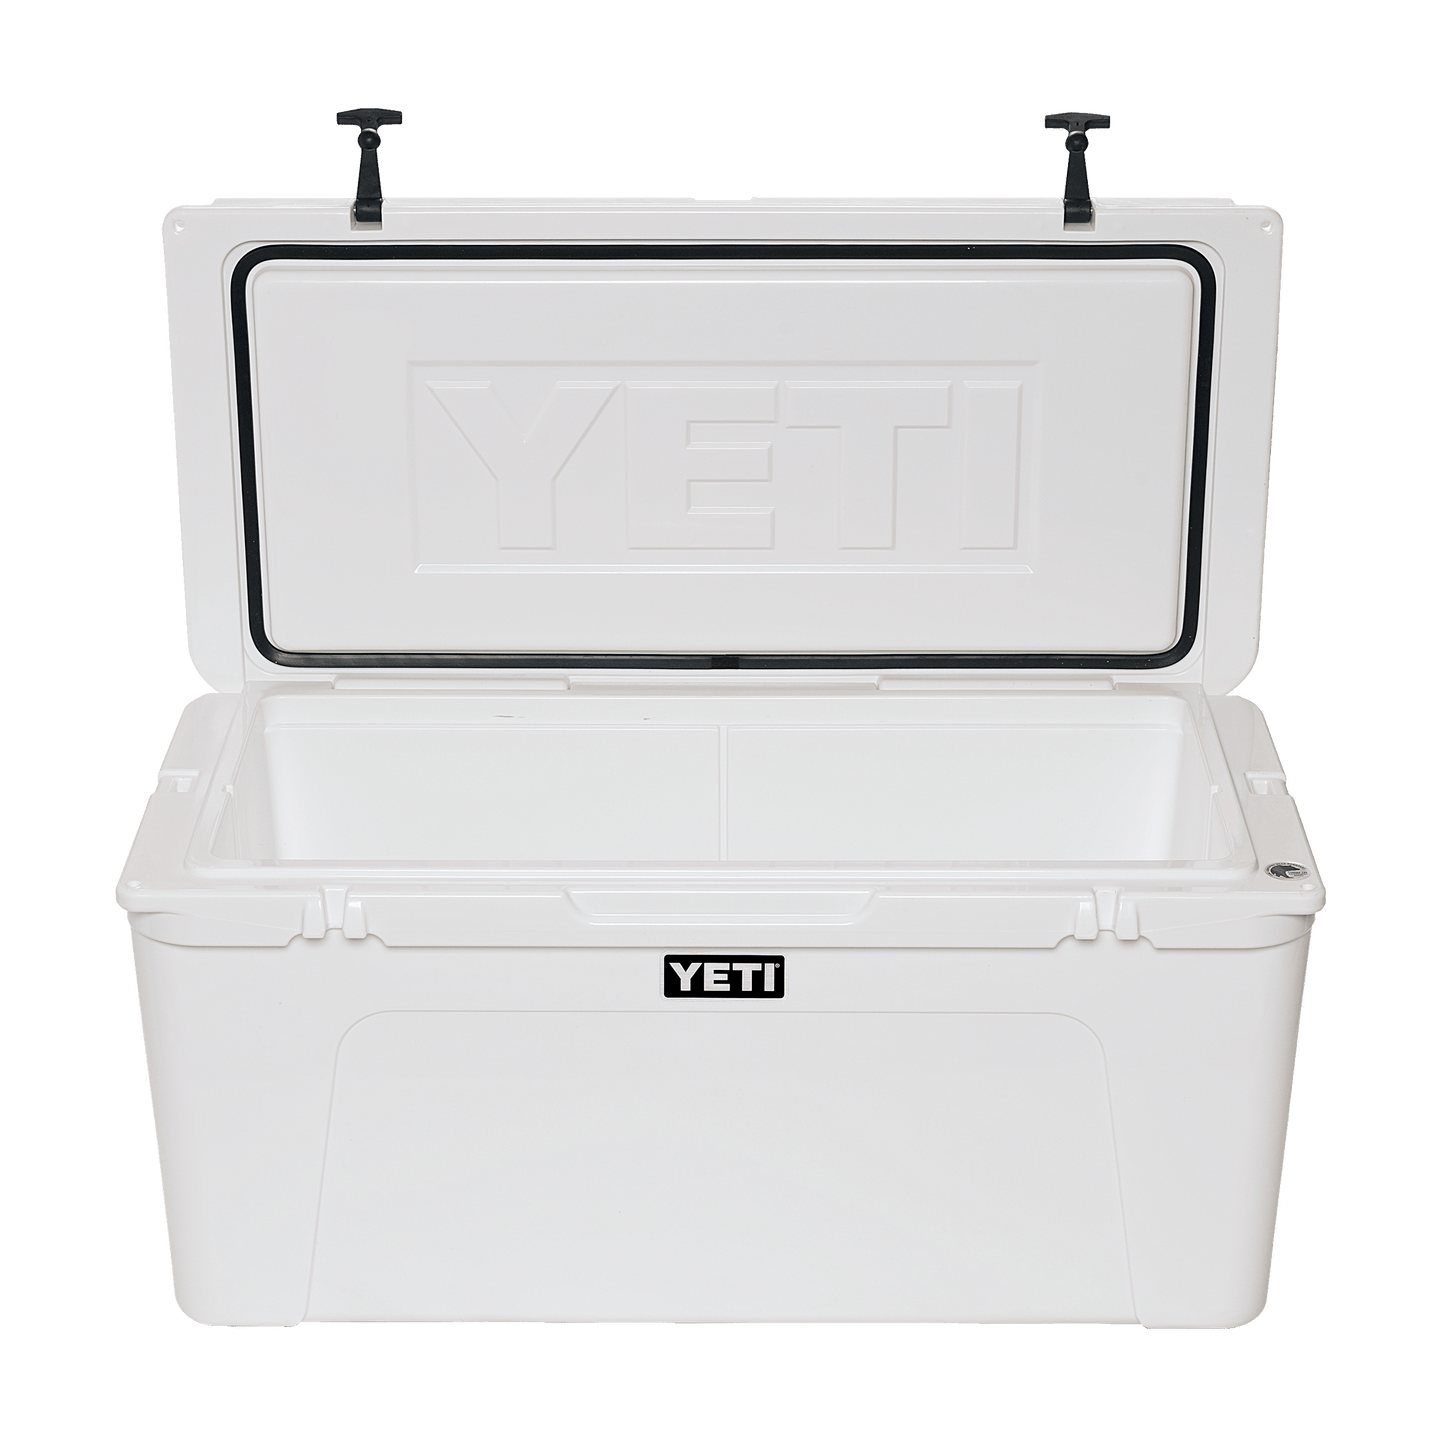 YETI Tundra® 125 Cool Box White